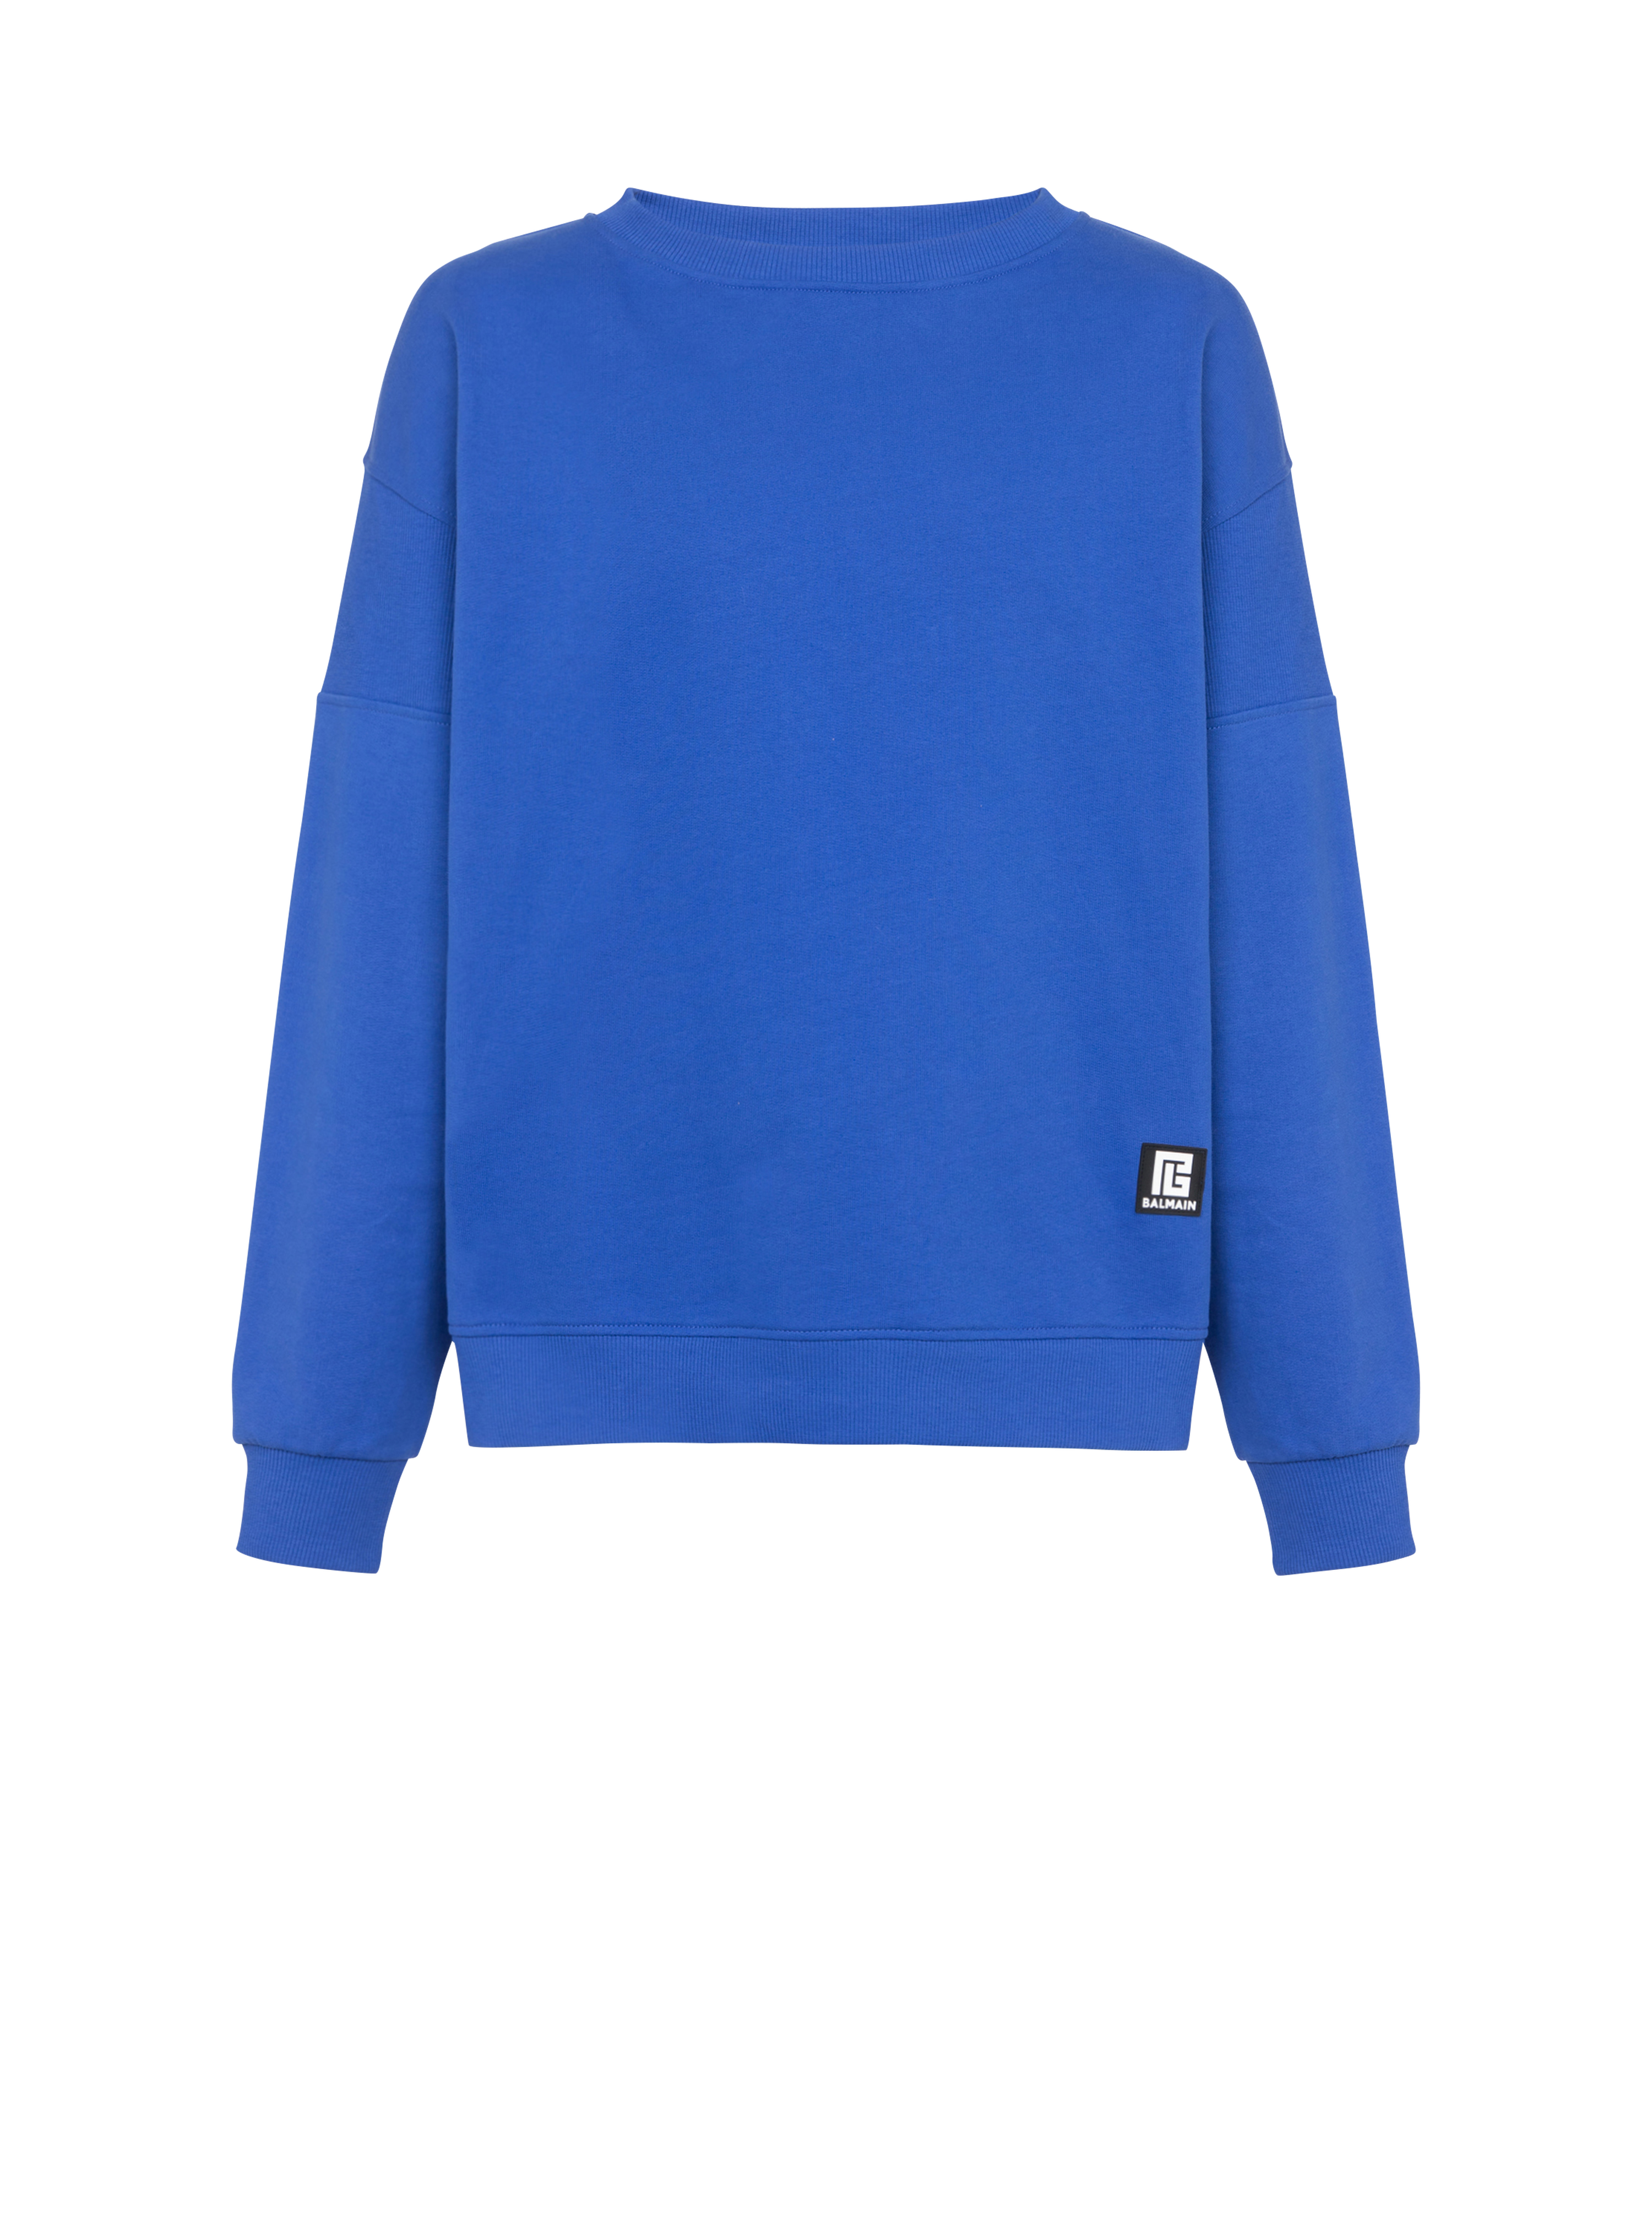 Eco-designed cotton sweatshirt with Balmain logo print, navy